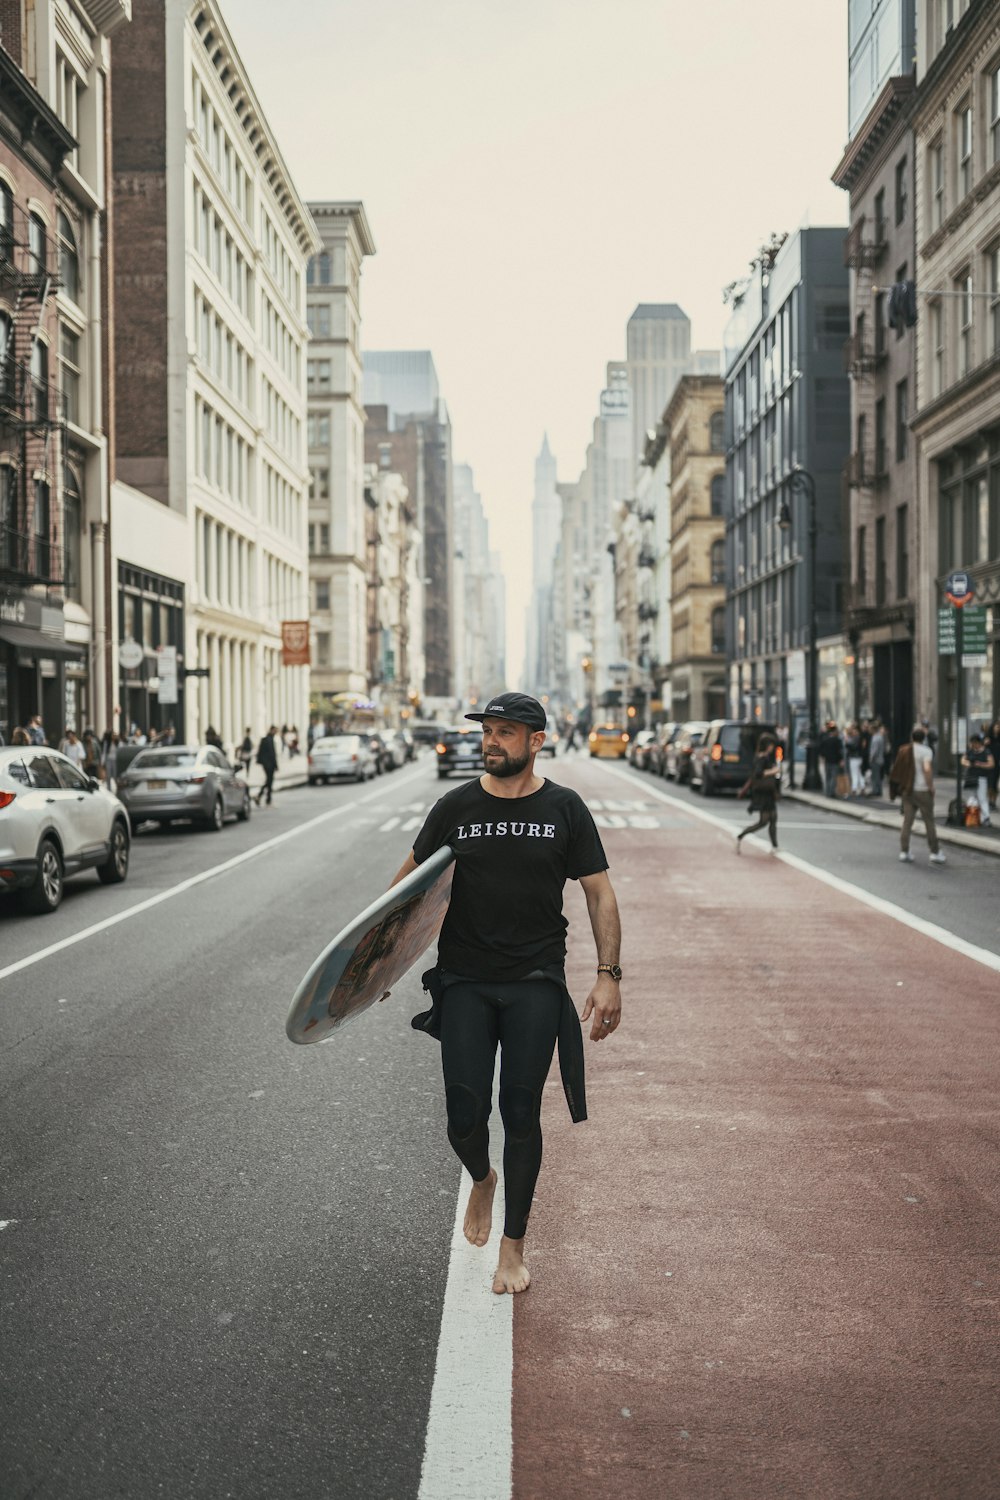 a man walking down a street holding a surfboard